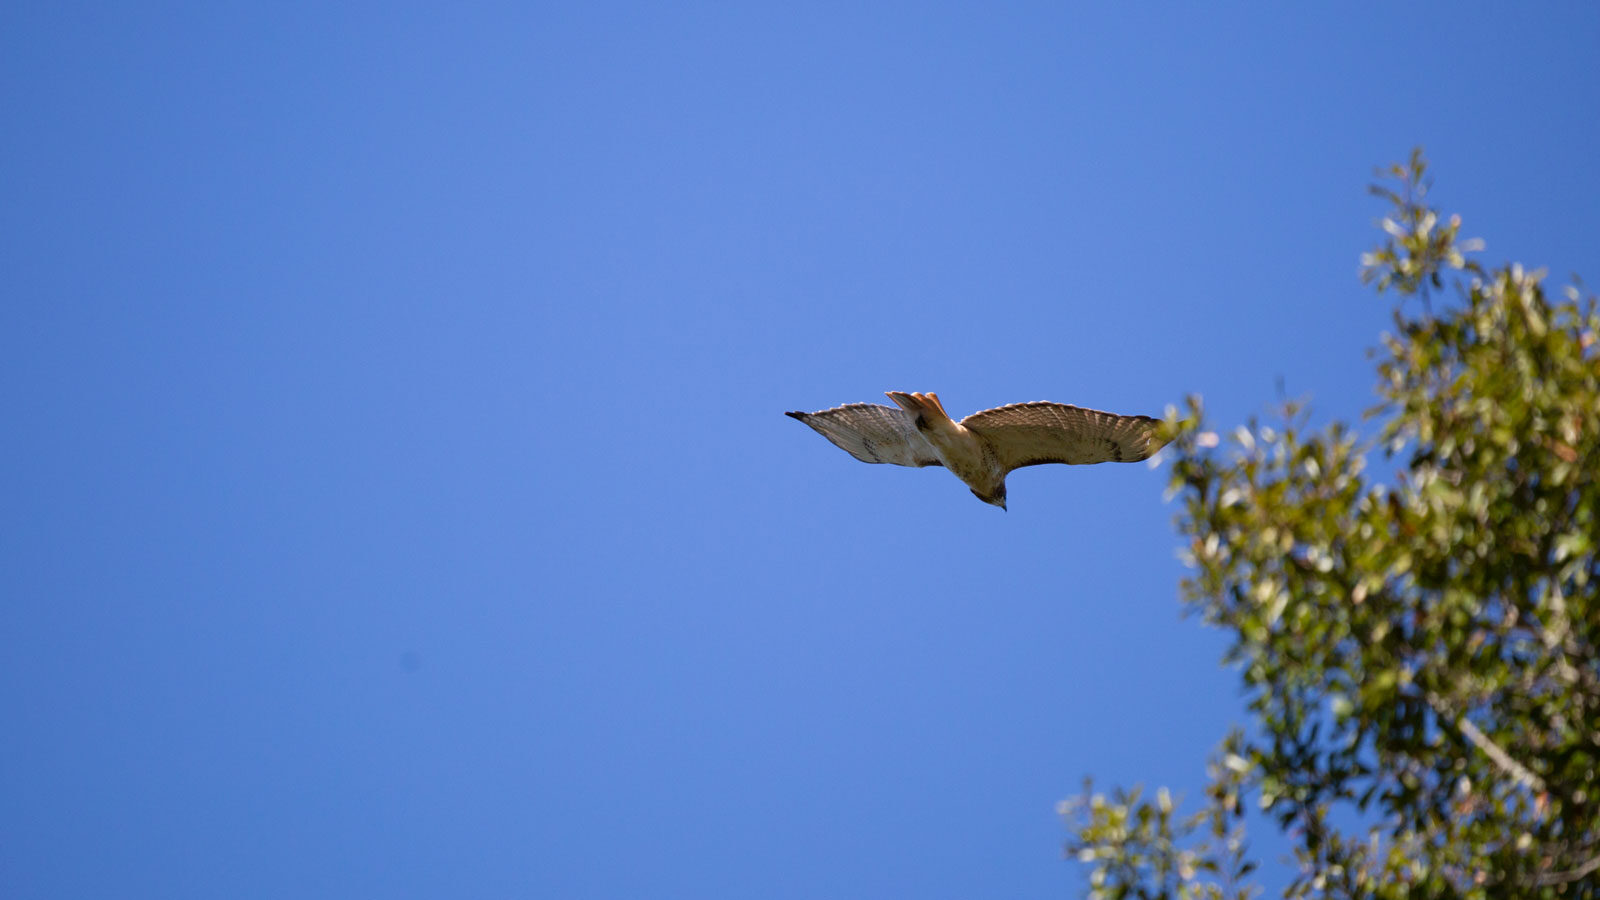 Red-tailed hawk soaring near a tree